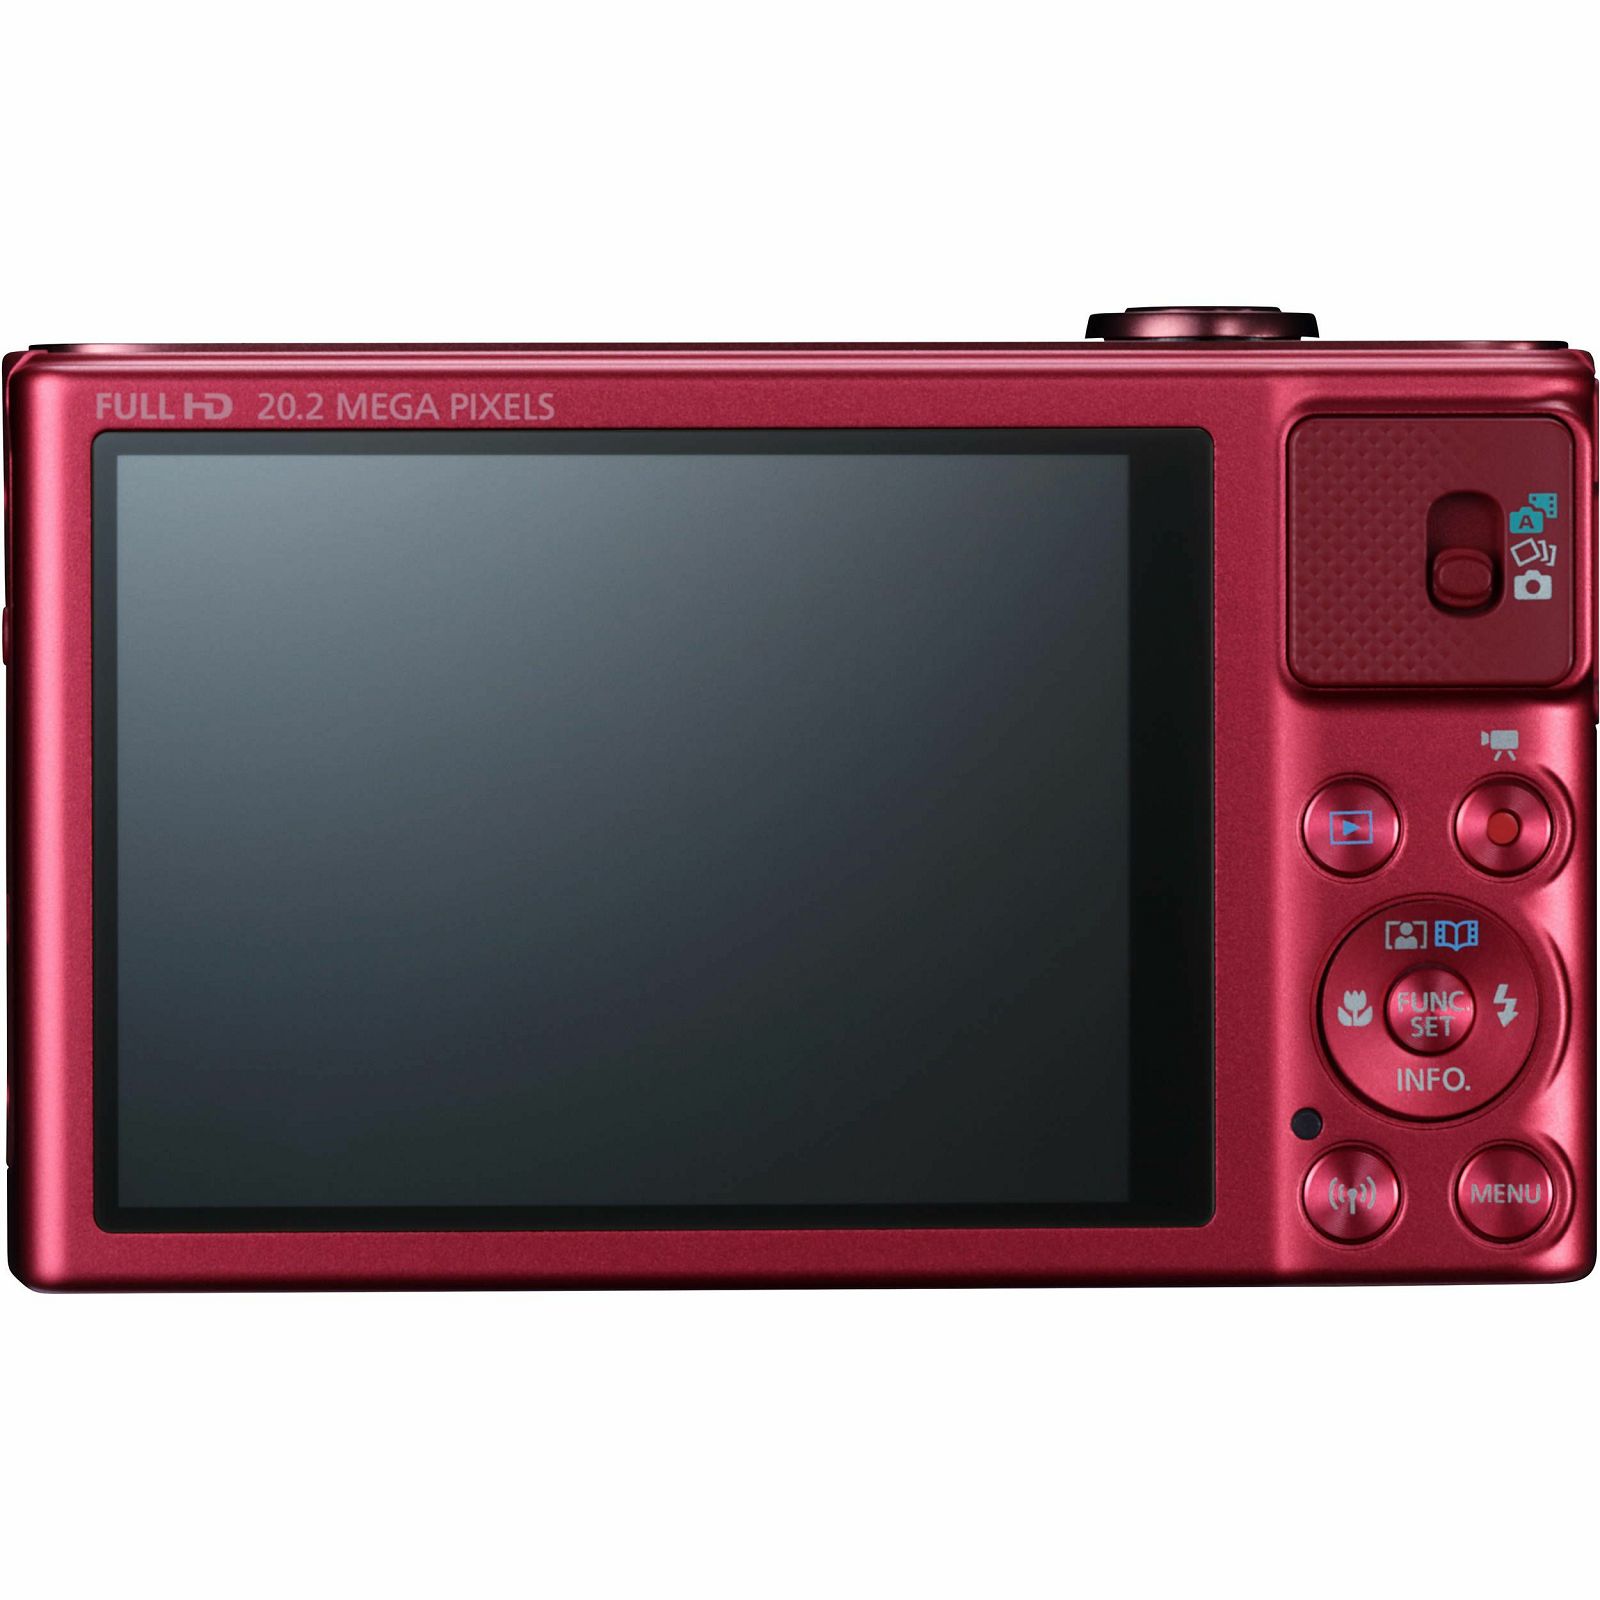 Canon Powershot SX620 HS Essentials KIT Red crveni digitalni fotoaparat SX620 HS SX 620